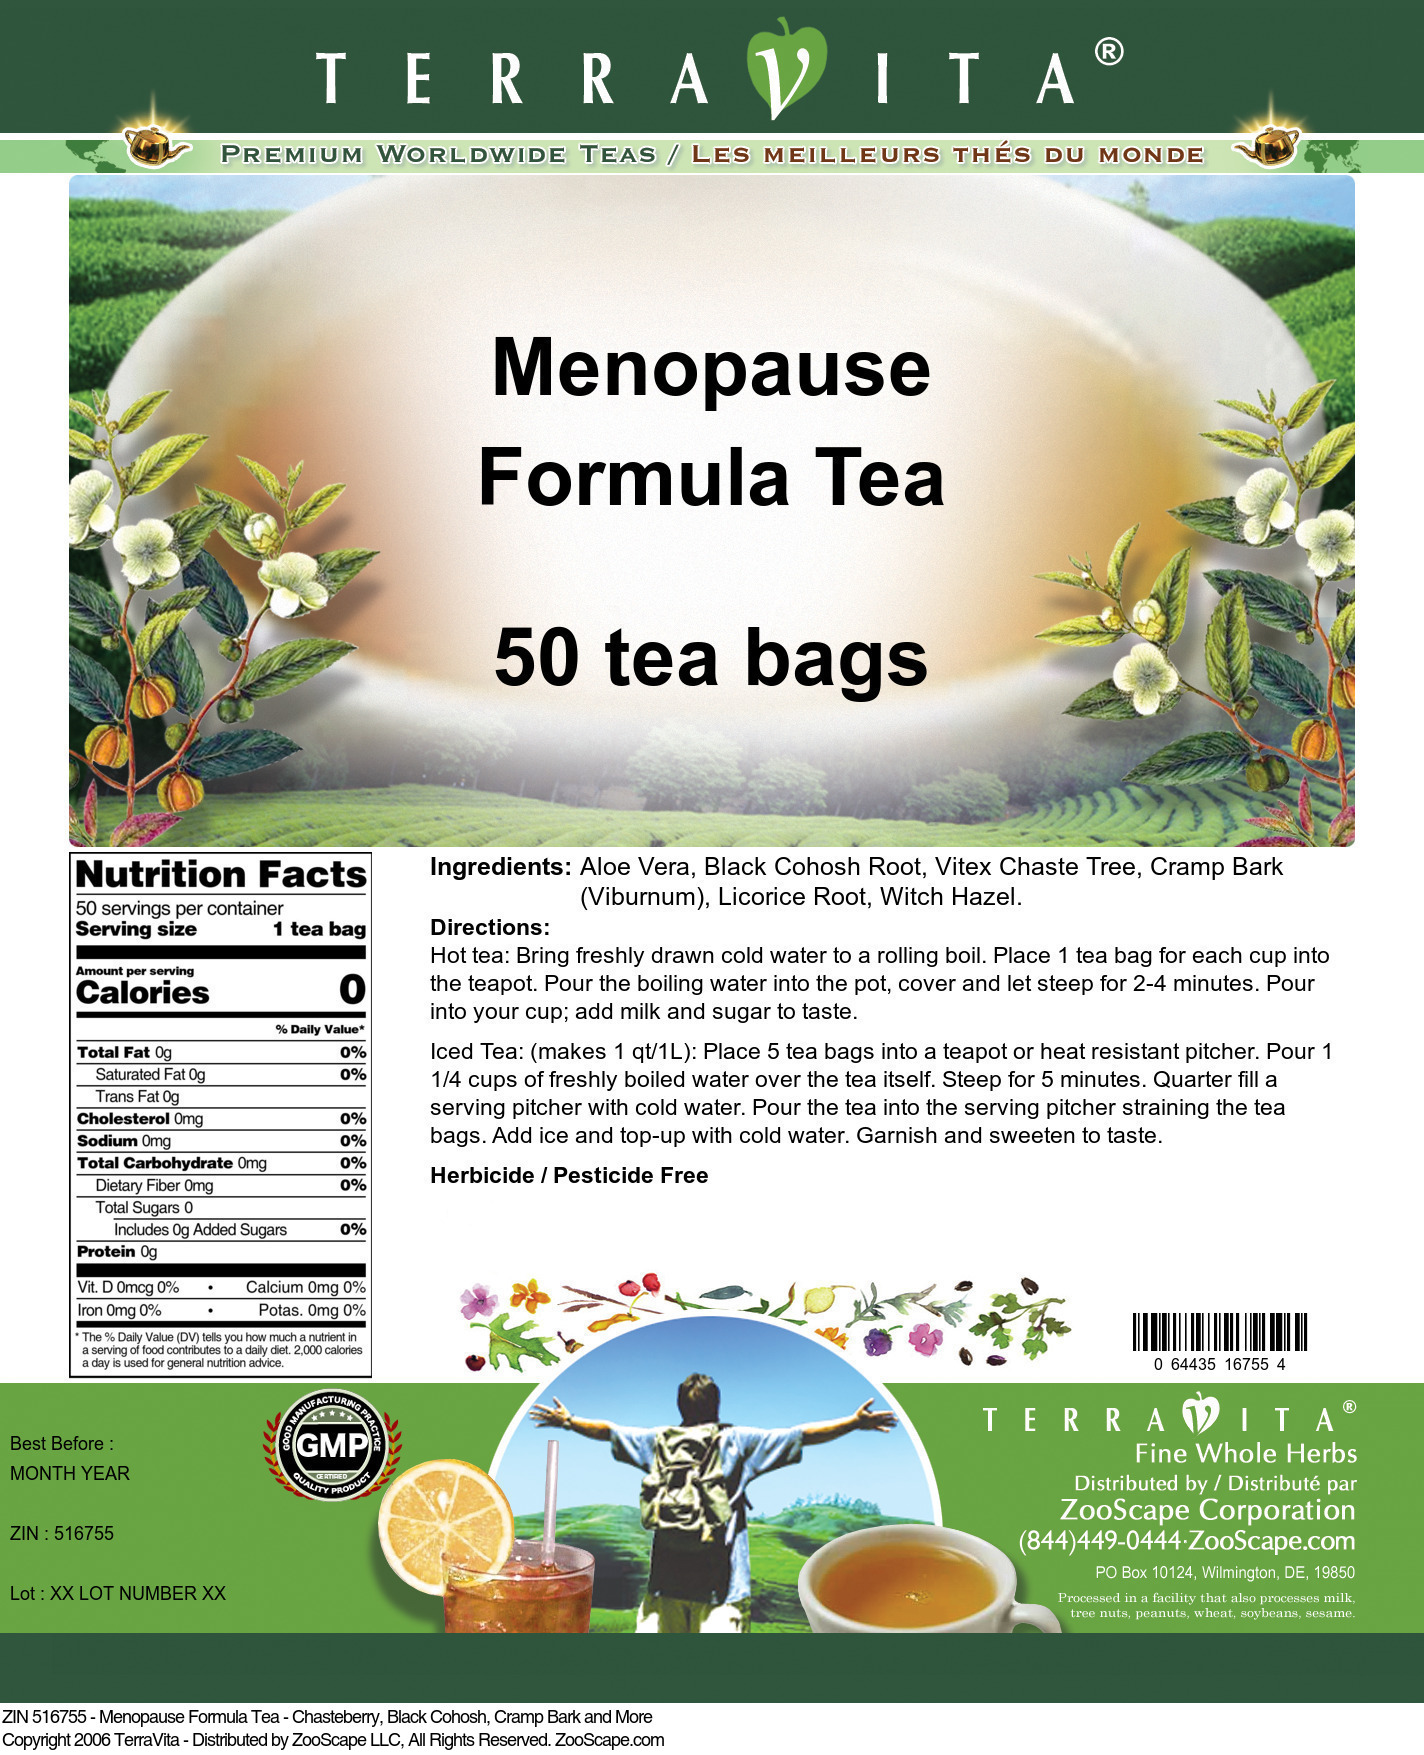 Menopause Formula Tea - Chasteberry, Black Cohosh, Cramp Bark and More - Label